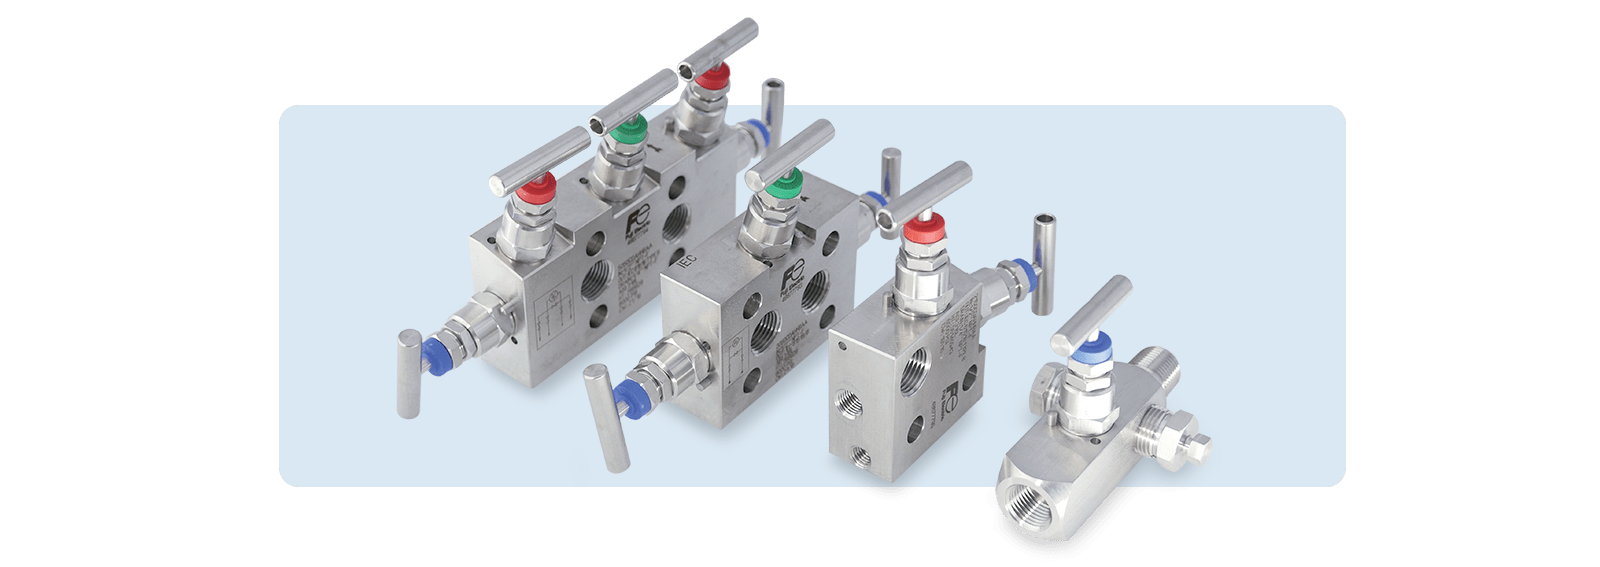 1 to 5-valves manifold range